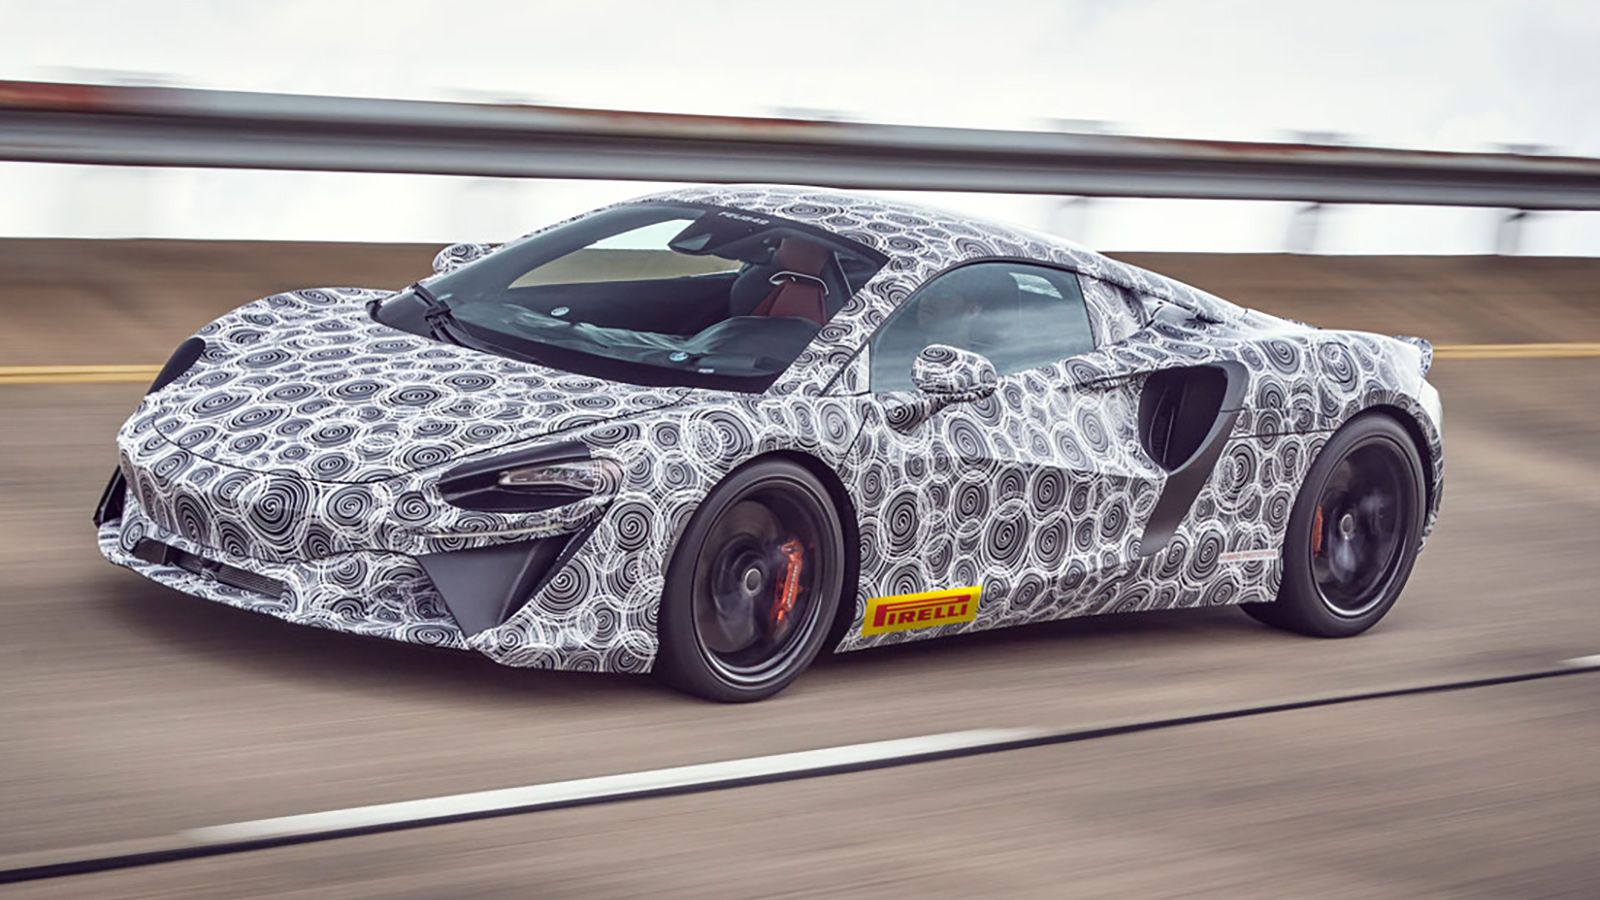 Illustration for article titled New McLaren Looks Good